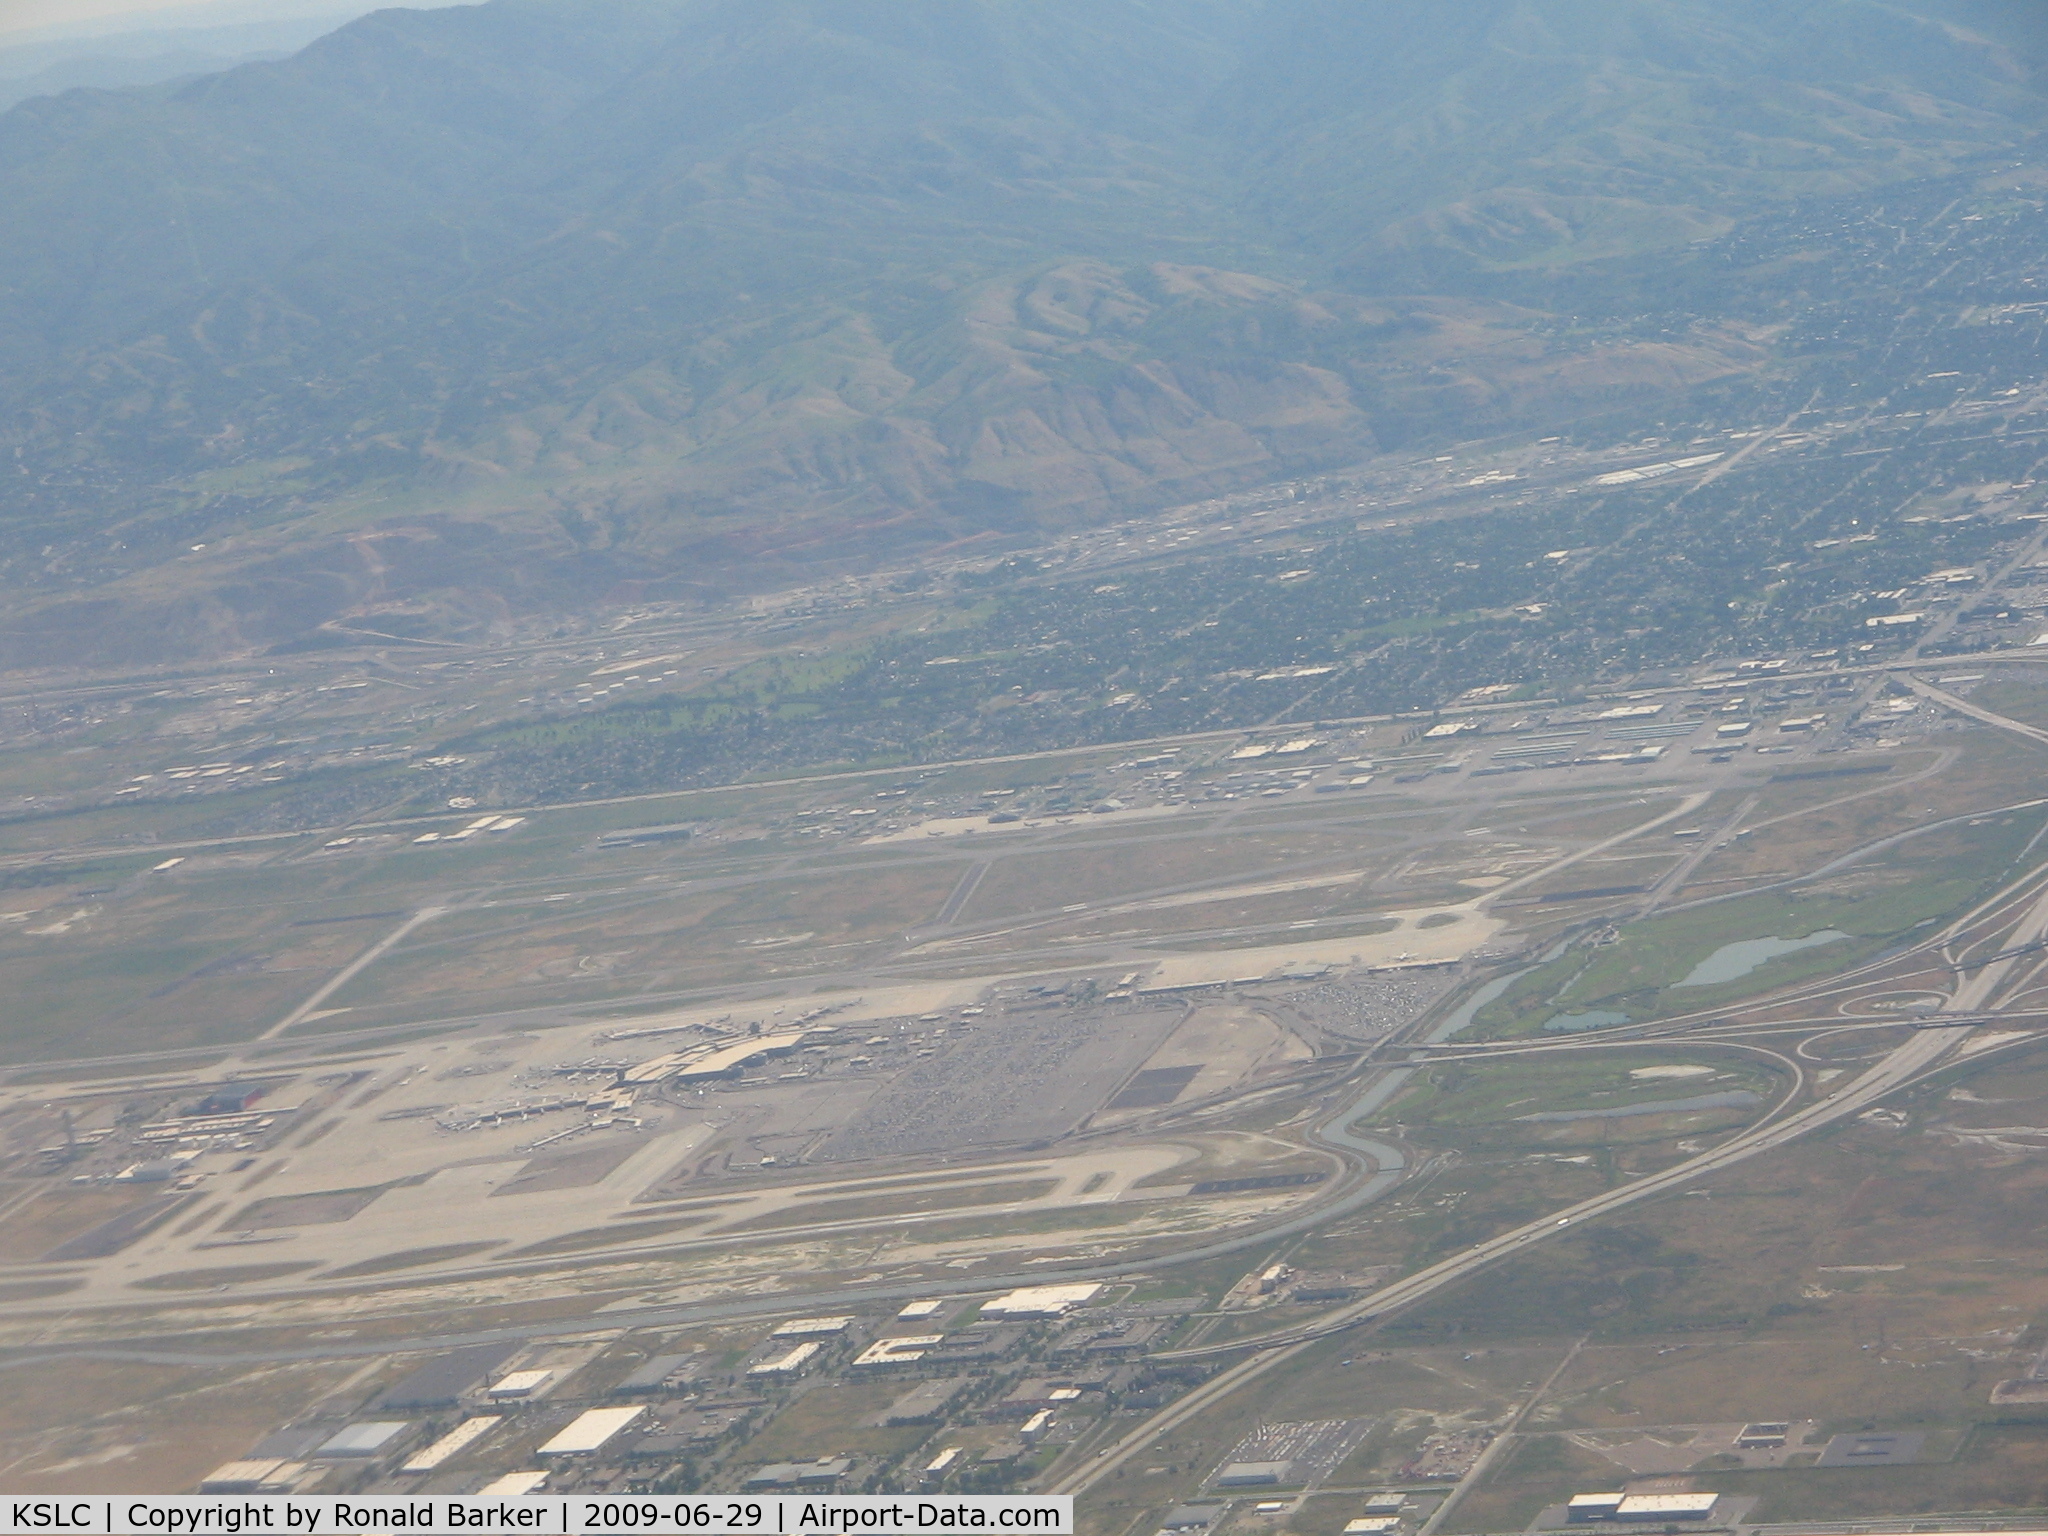 Salt Lake City International Airport (SLC) - SLC traffic pattern